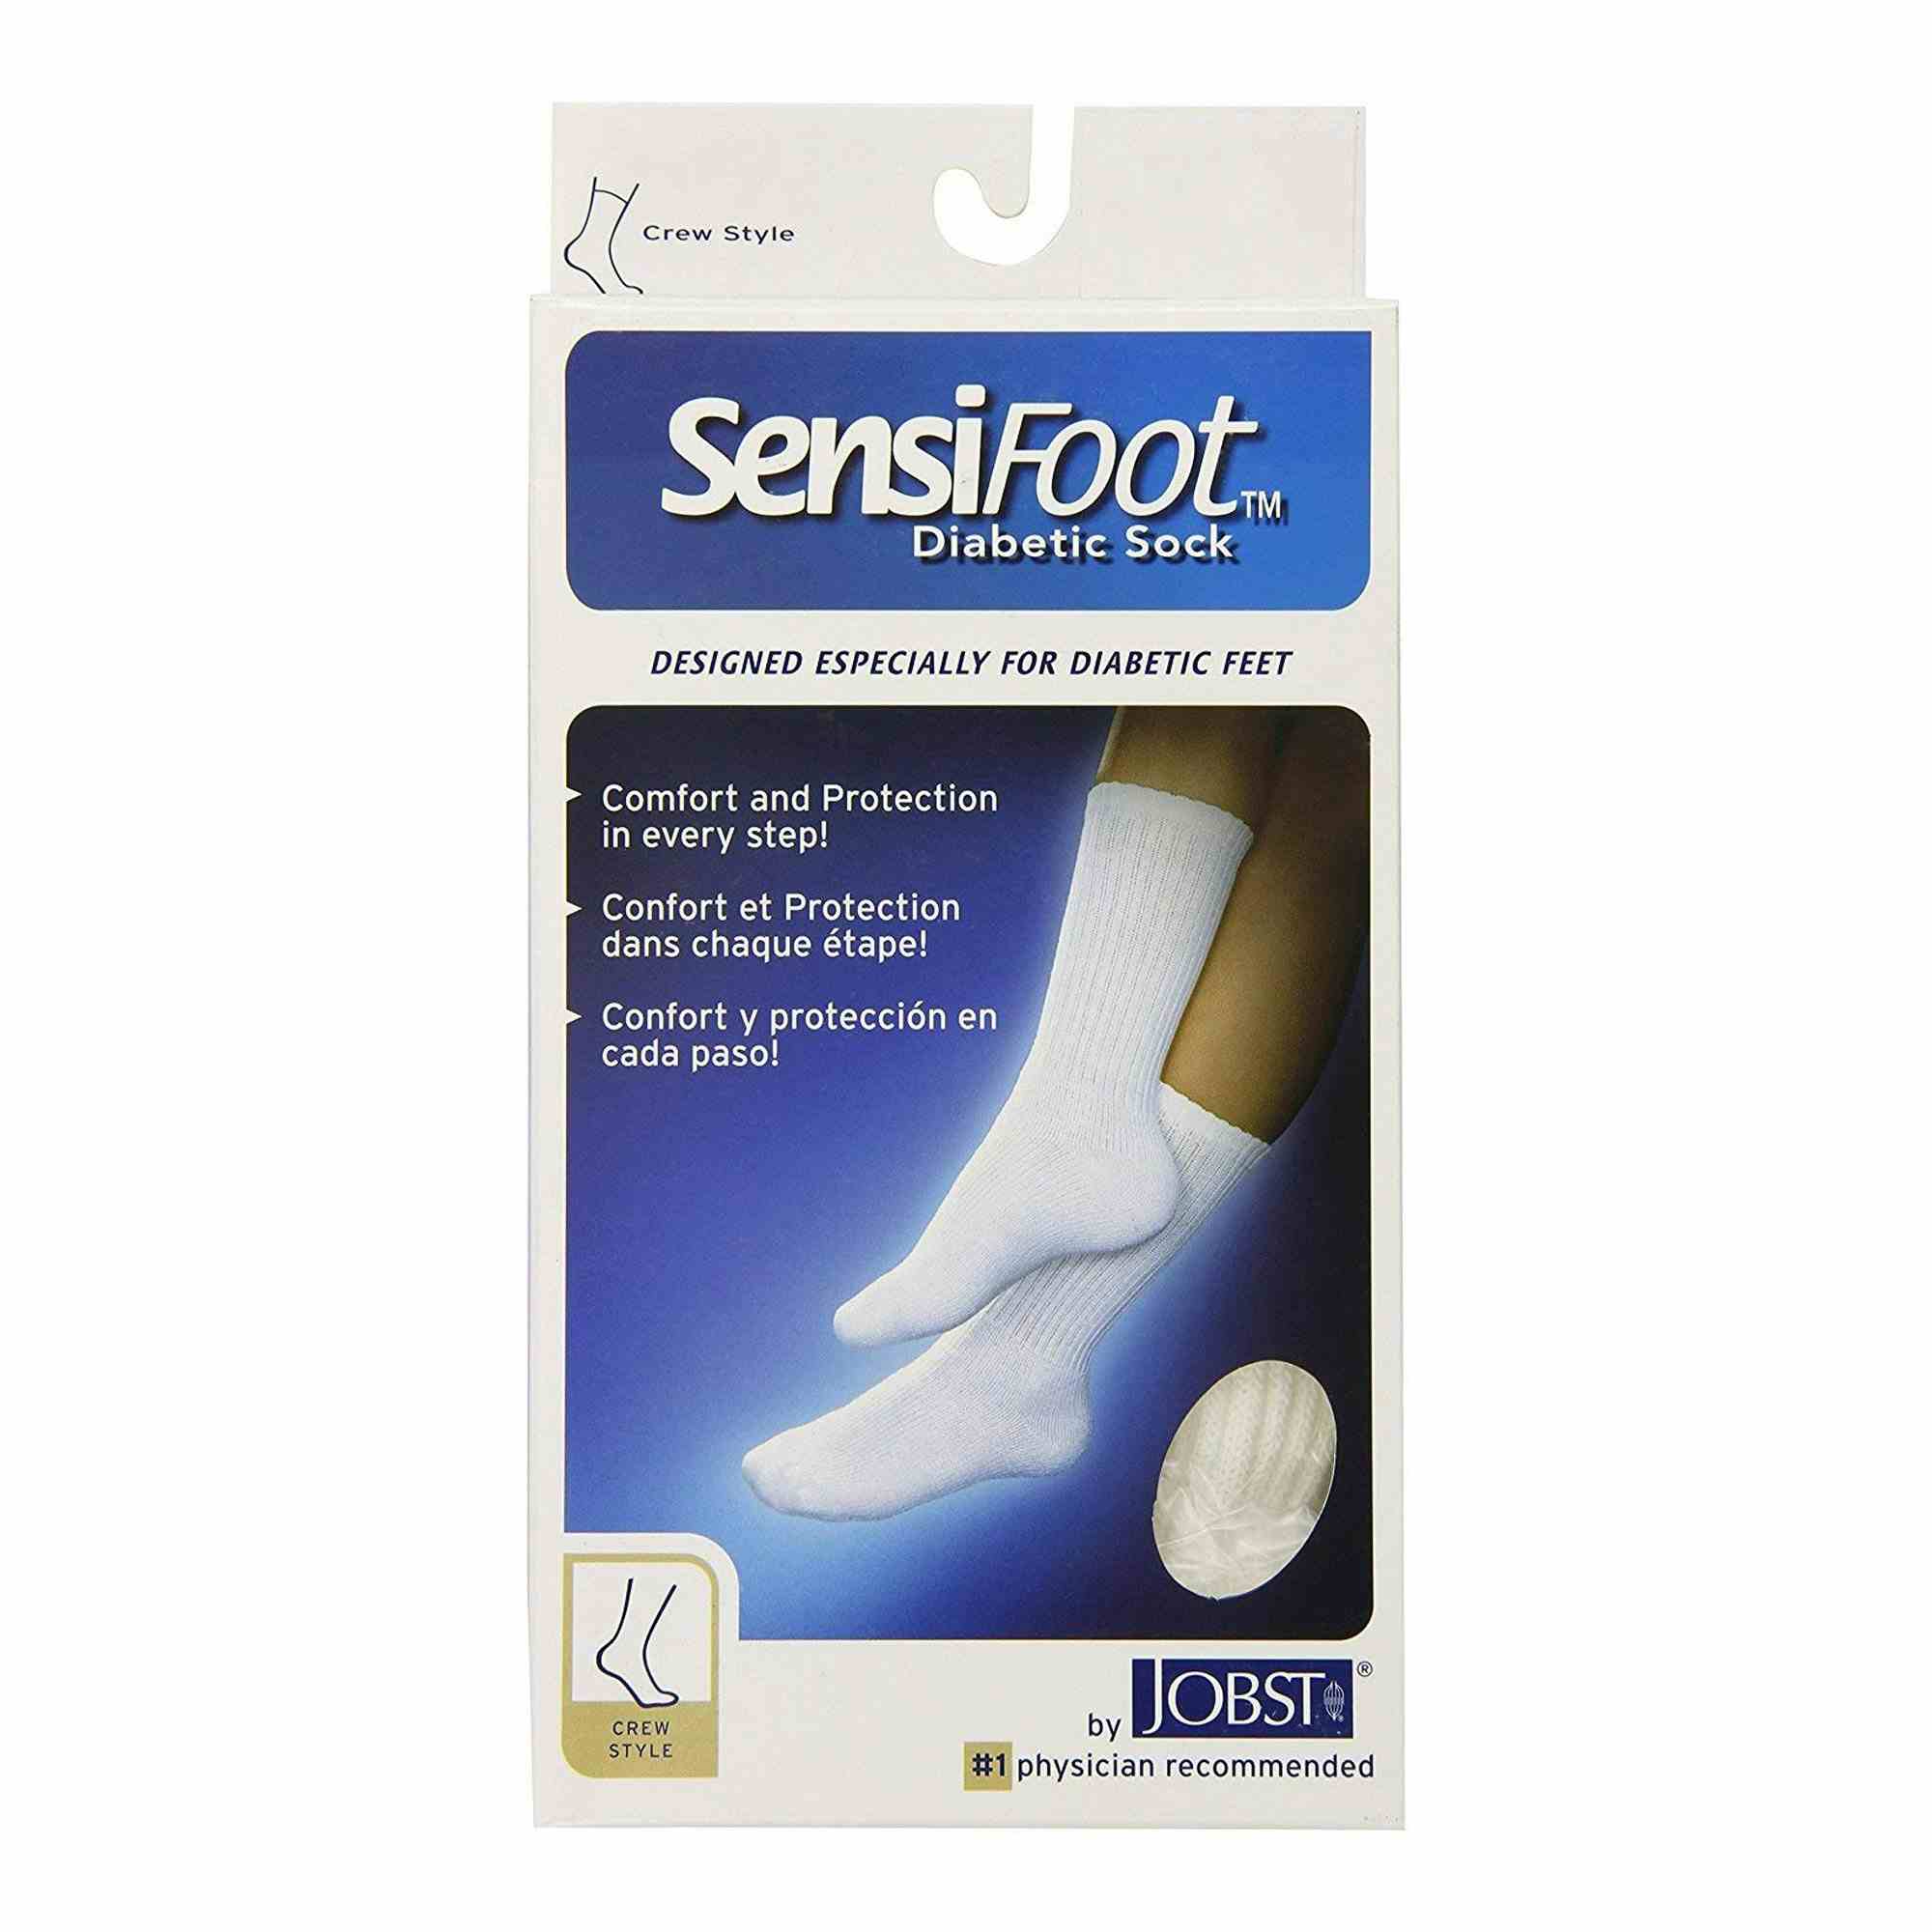 JOBST SensiFoot Diabetic Sock